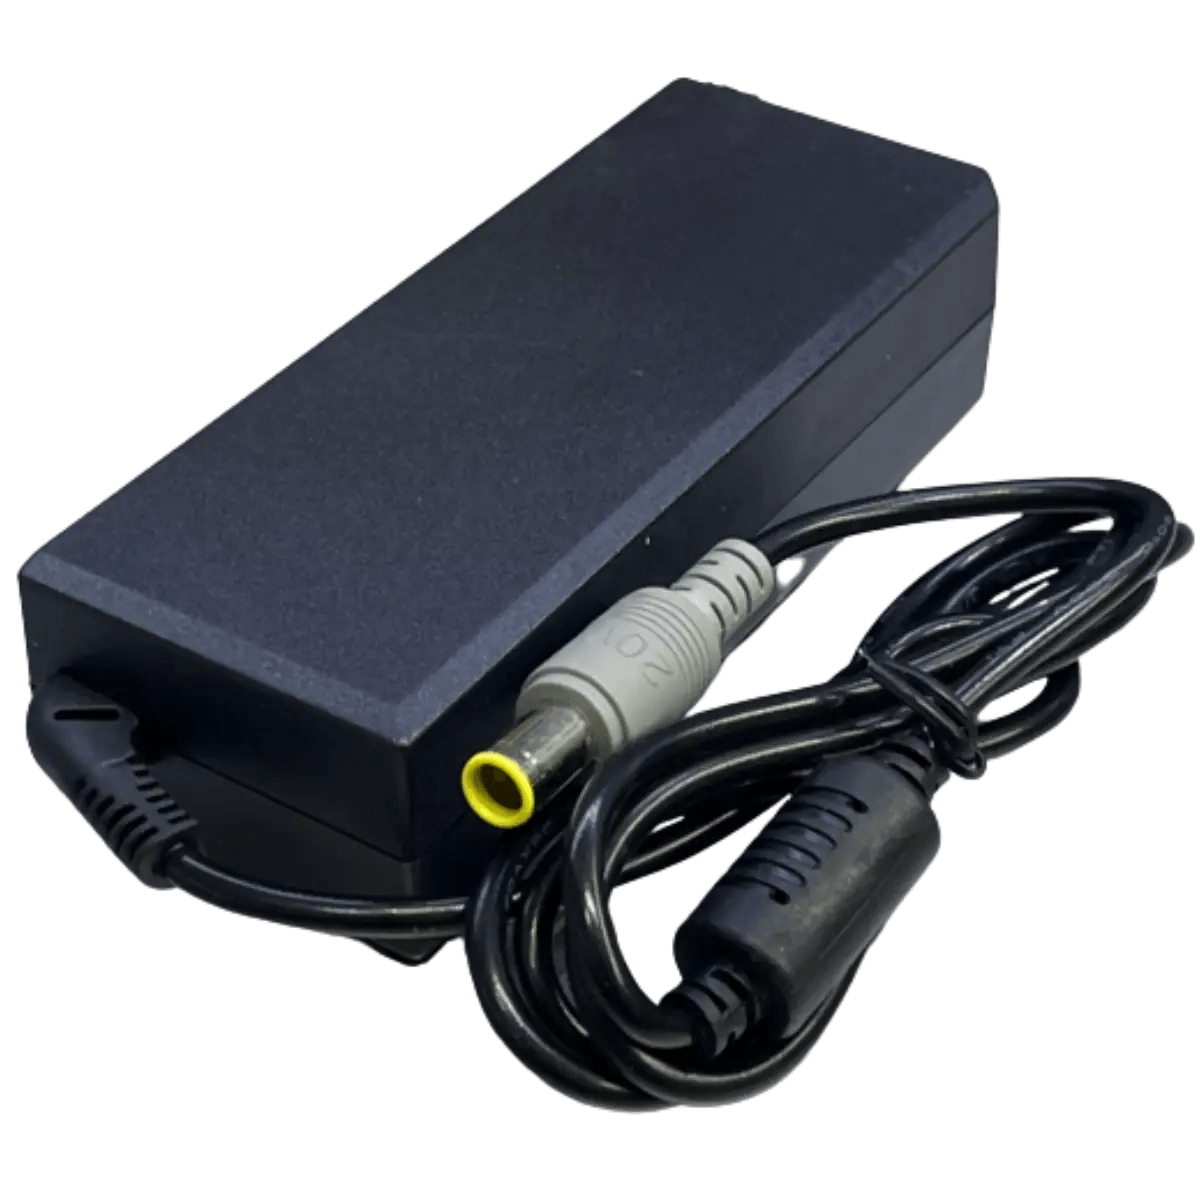 Chargeur pour PC Portable IBM/Lenovo Pour Lenovo ThinkPad Helix